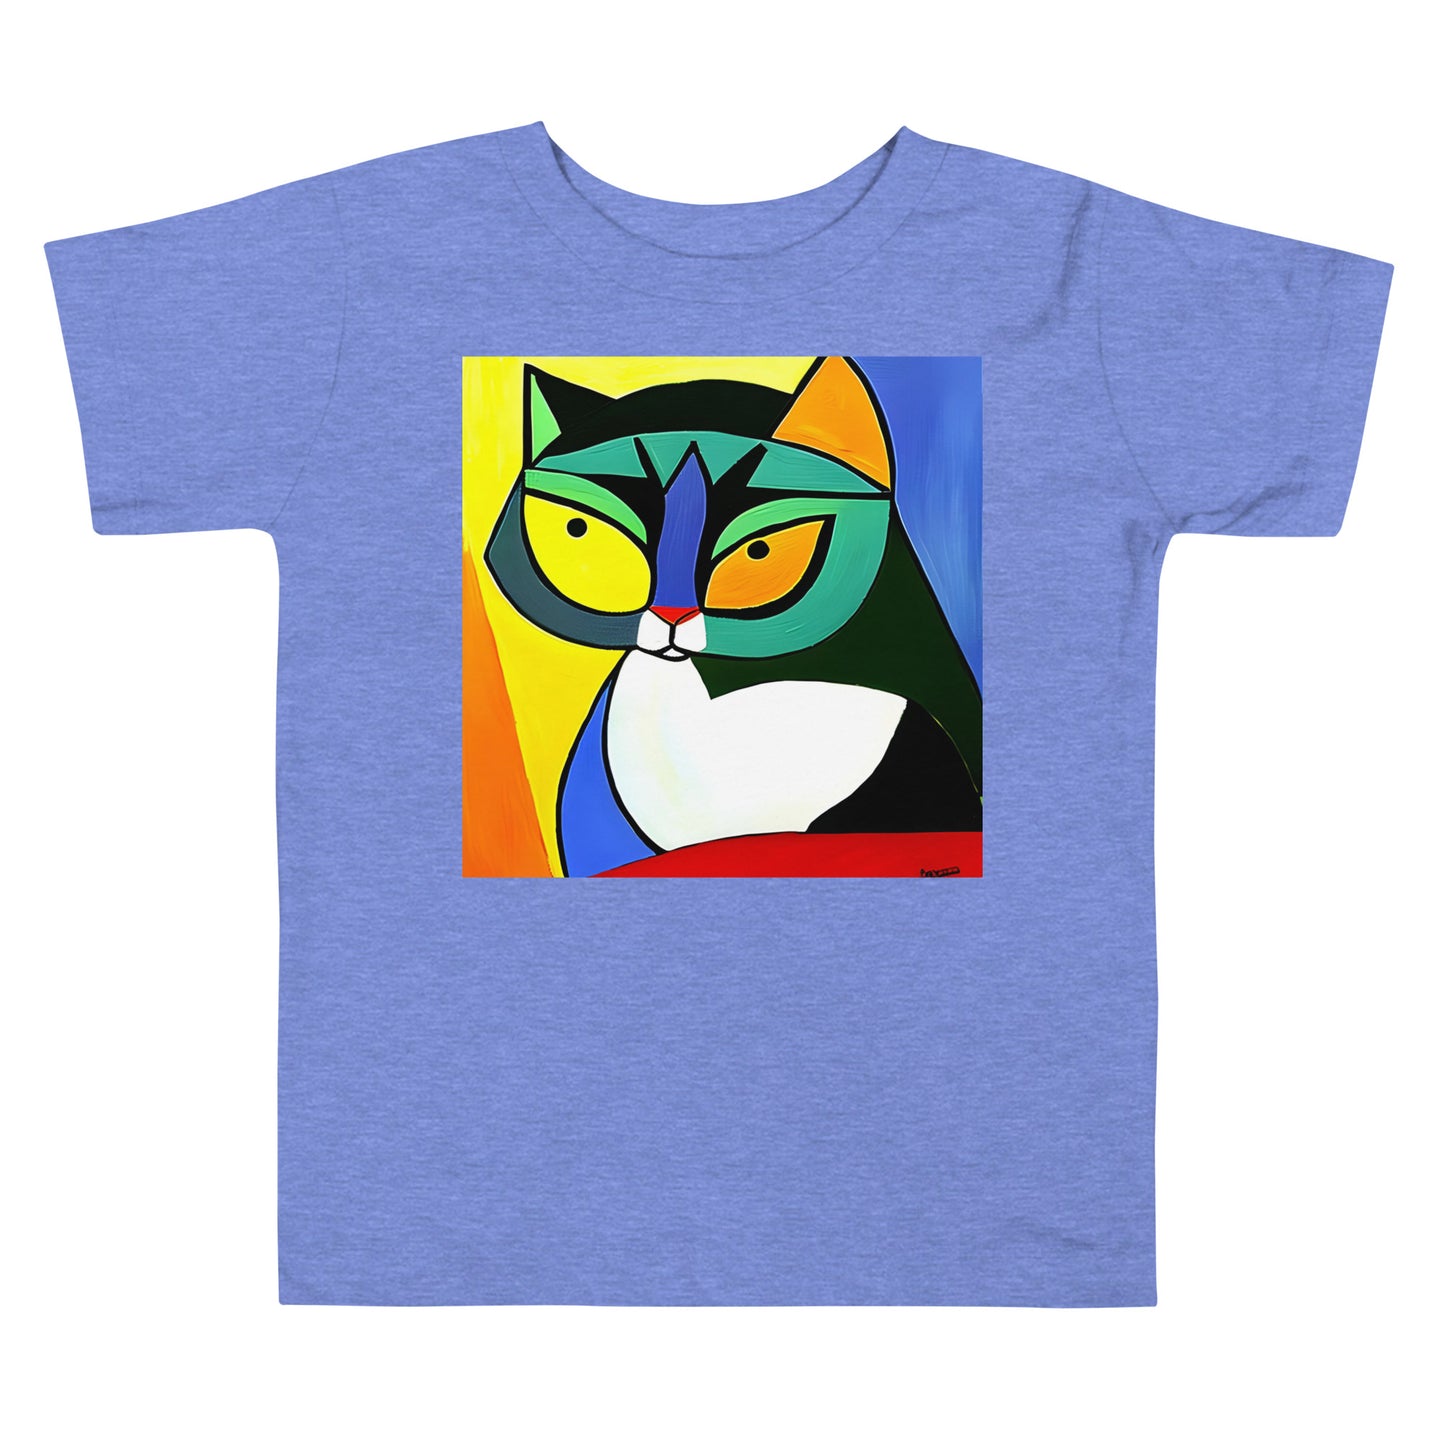 Purrfect Toddler's T-Shirt - 004